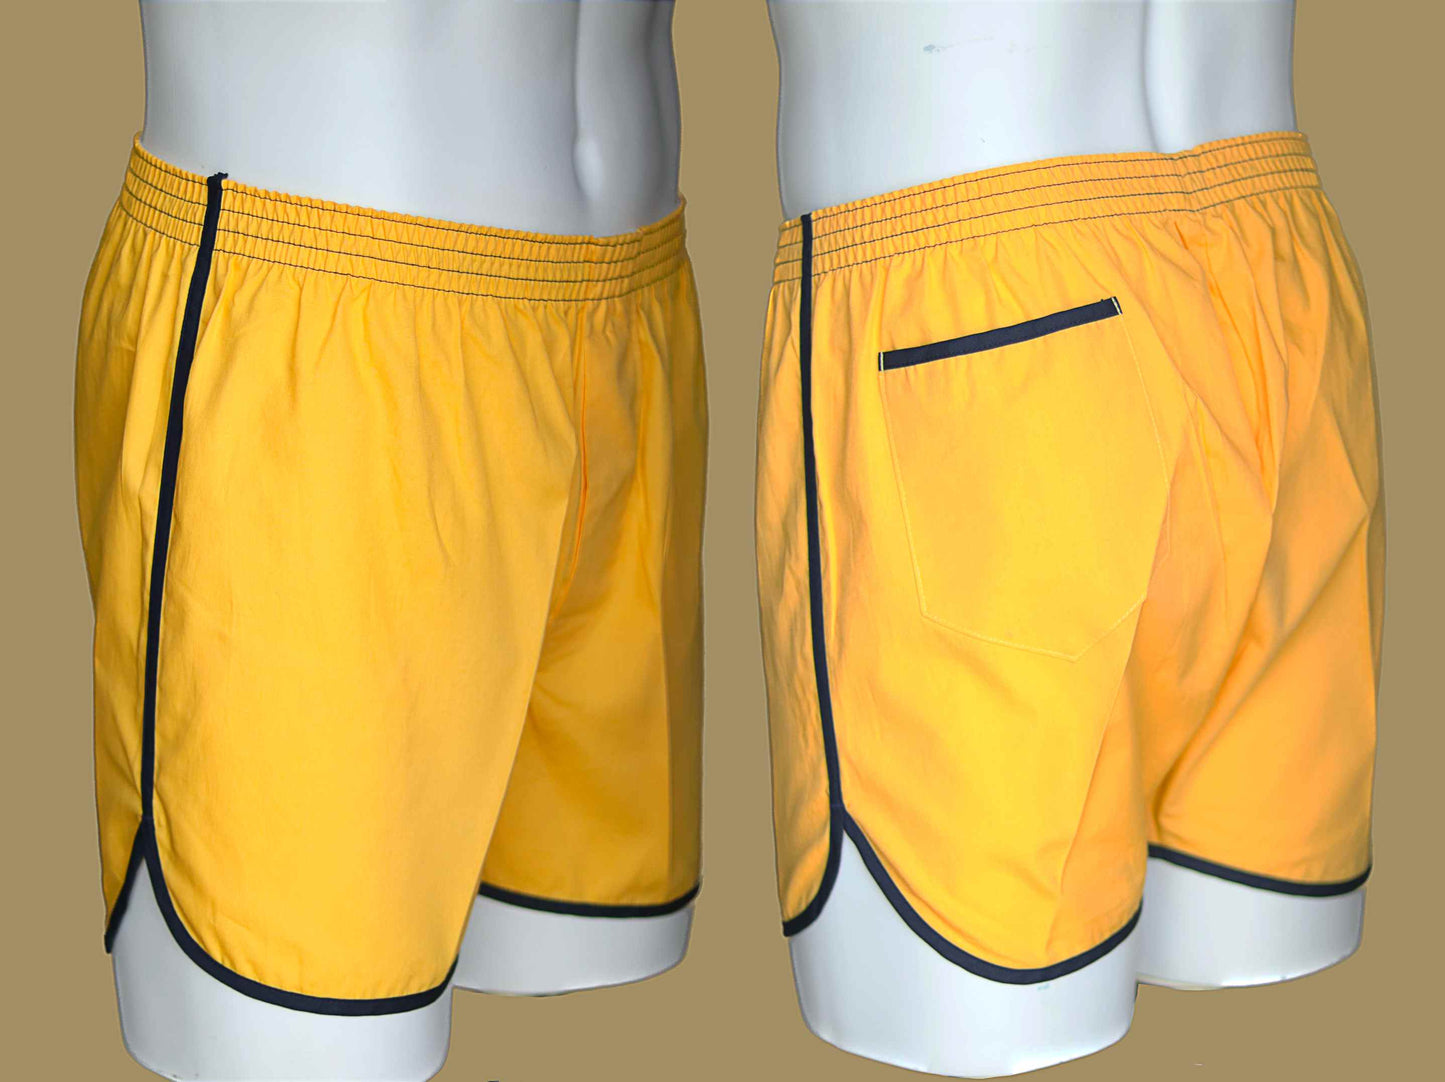 Vintage Boxer Shorts, Vintage Shorts, Yellow Mens Underwear, Mens Shorts